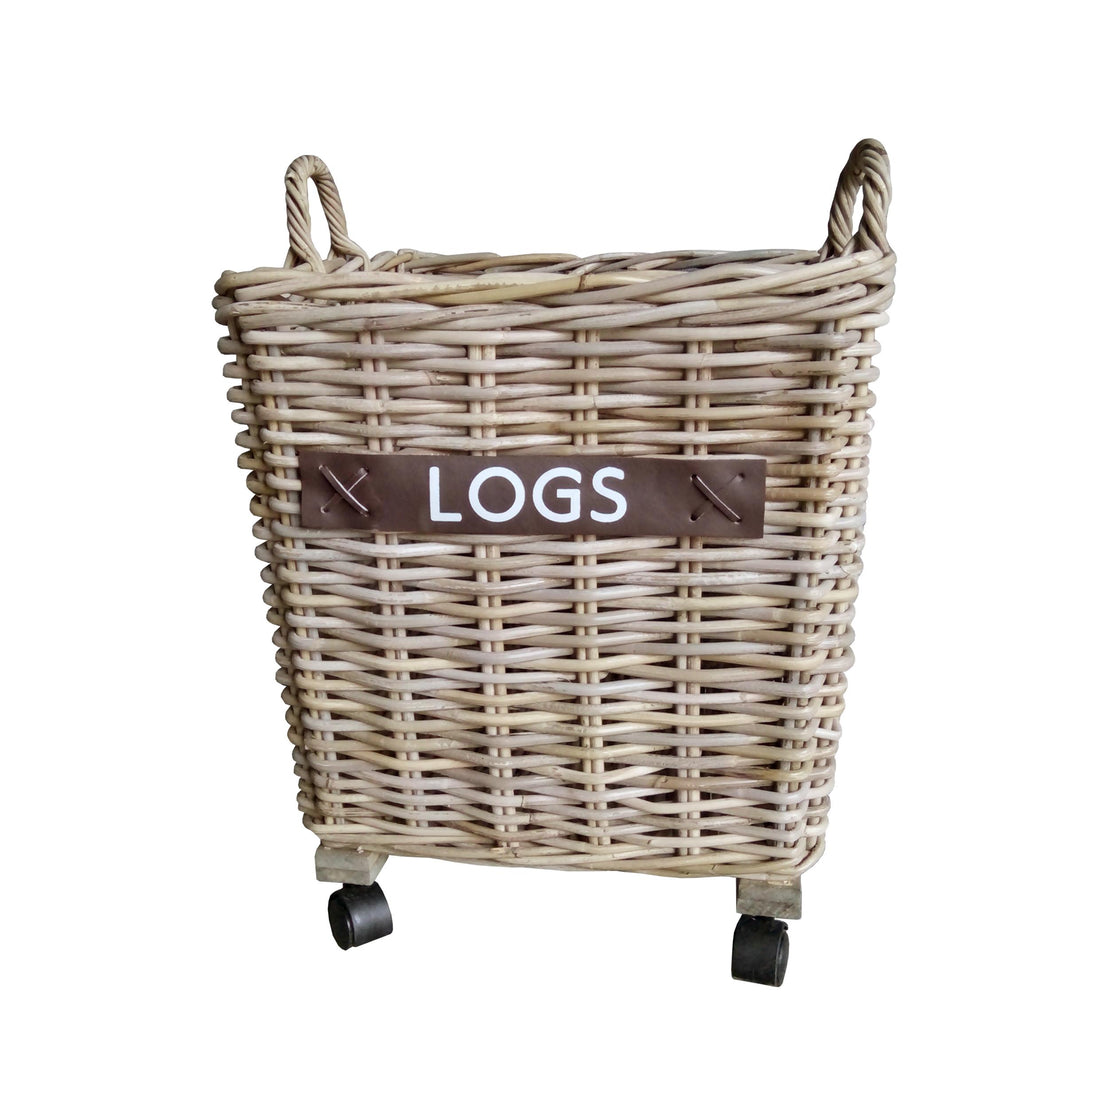 Kubu Square Wicker Log Basket With Castors - Medium